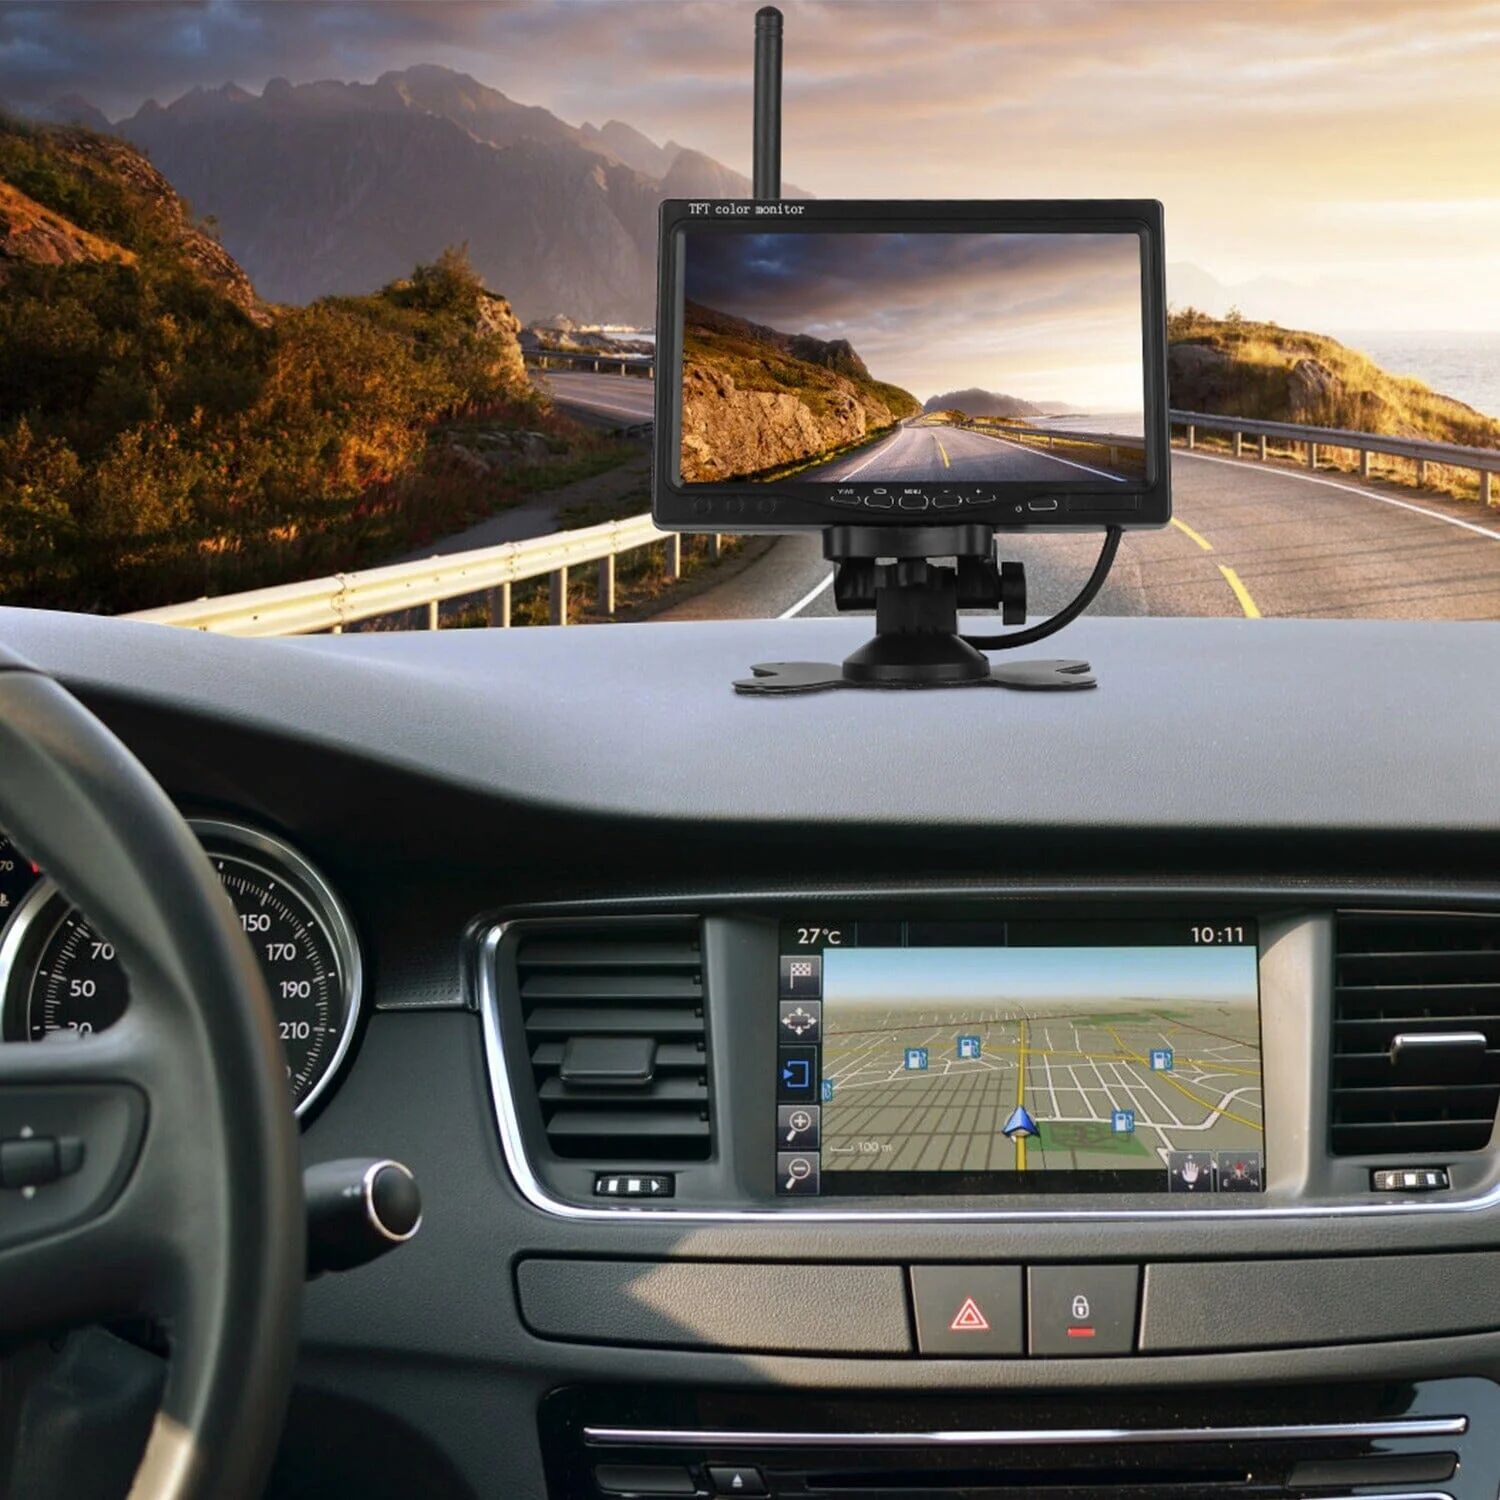 DailySale Wireless Backup Camera System Vehicle Rear View Monitor Kit